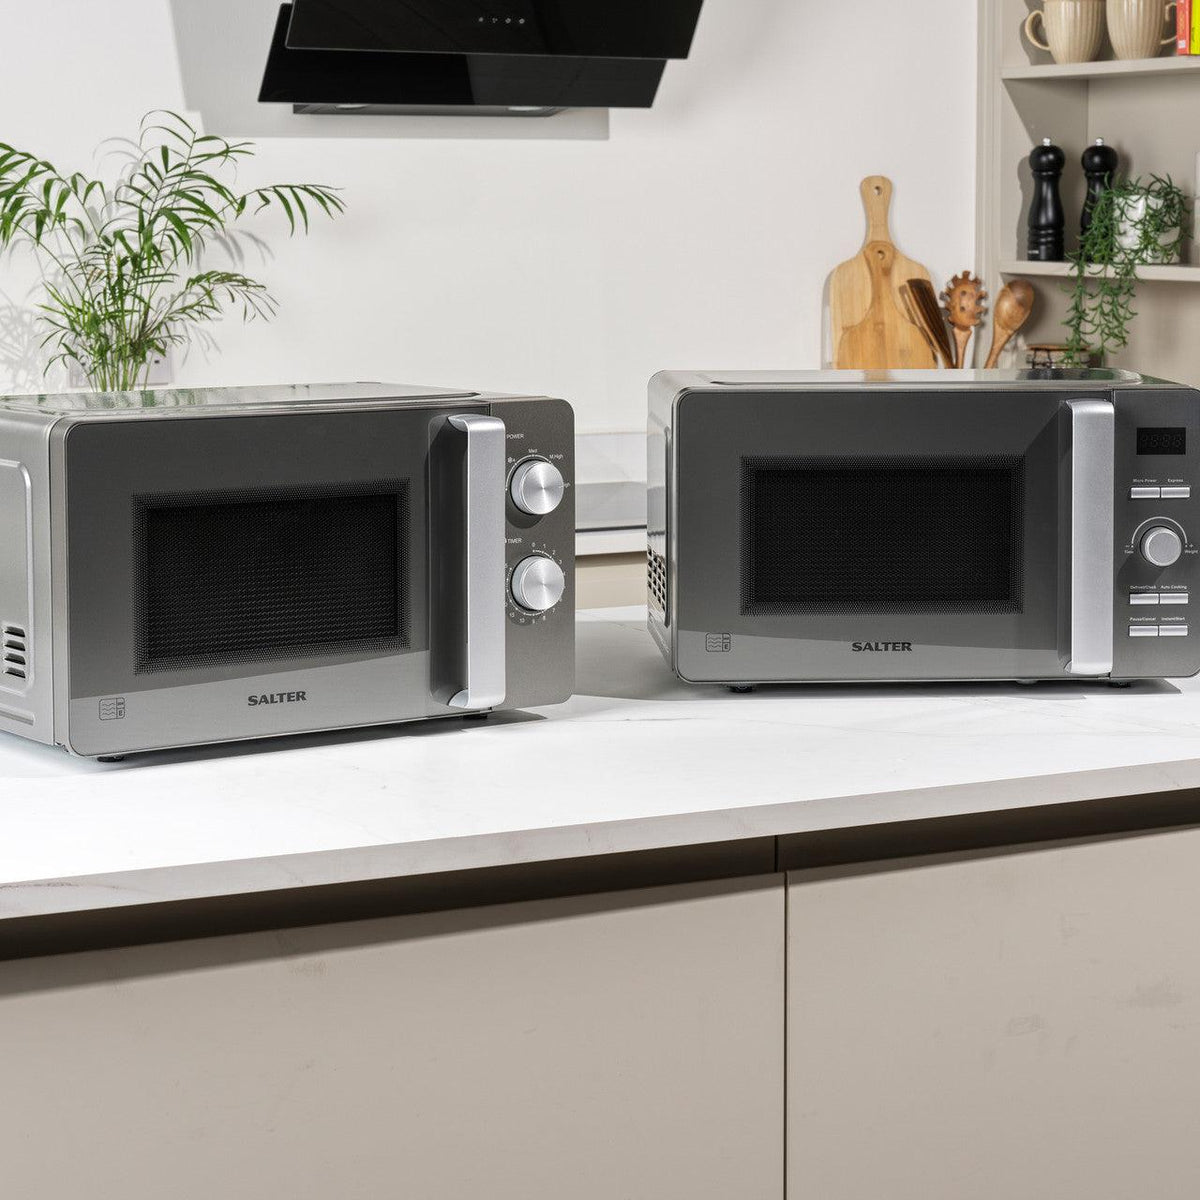 Salter Cosmos Grey Digital Microwave | 800W - Choice Stores